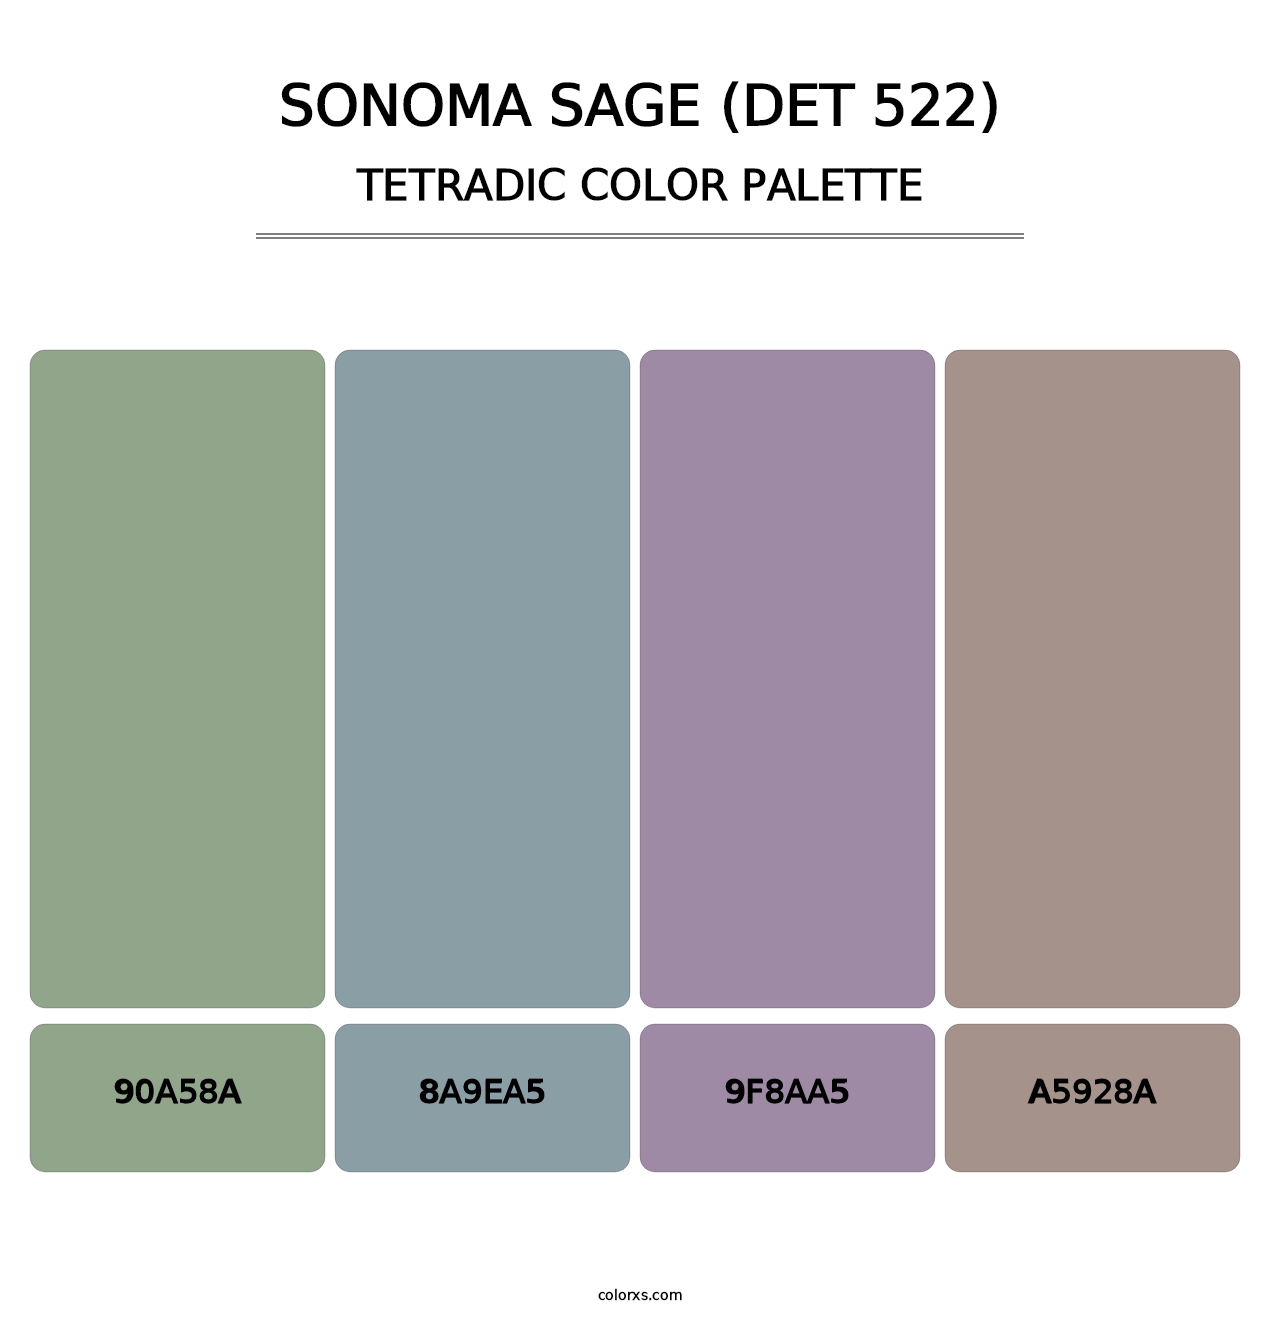 Sonoma Sage (DET 522) - Tetradic Color Palette